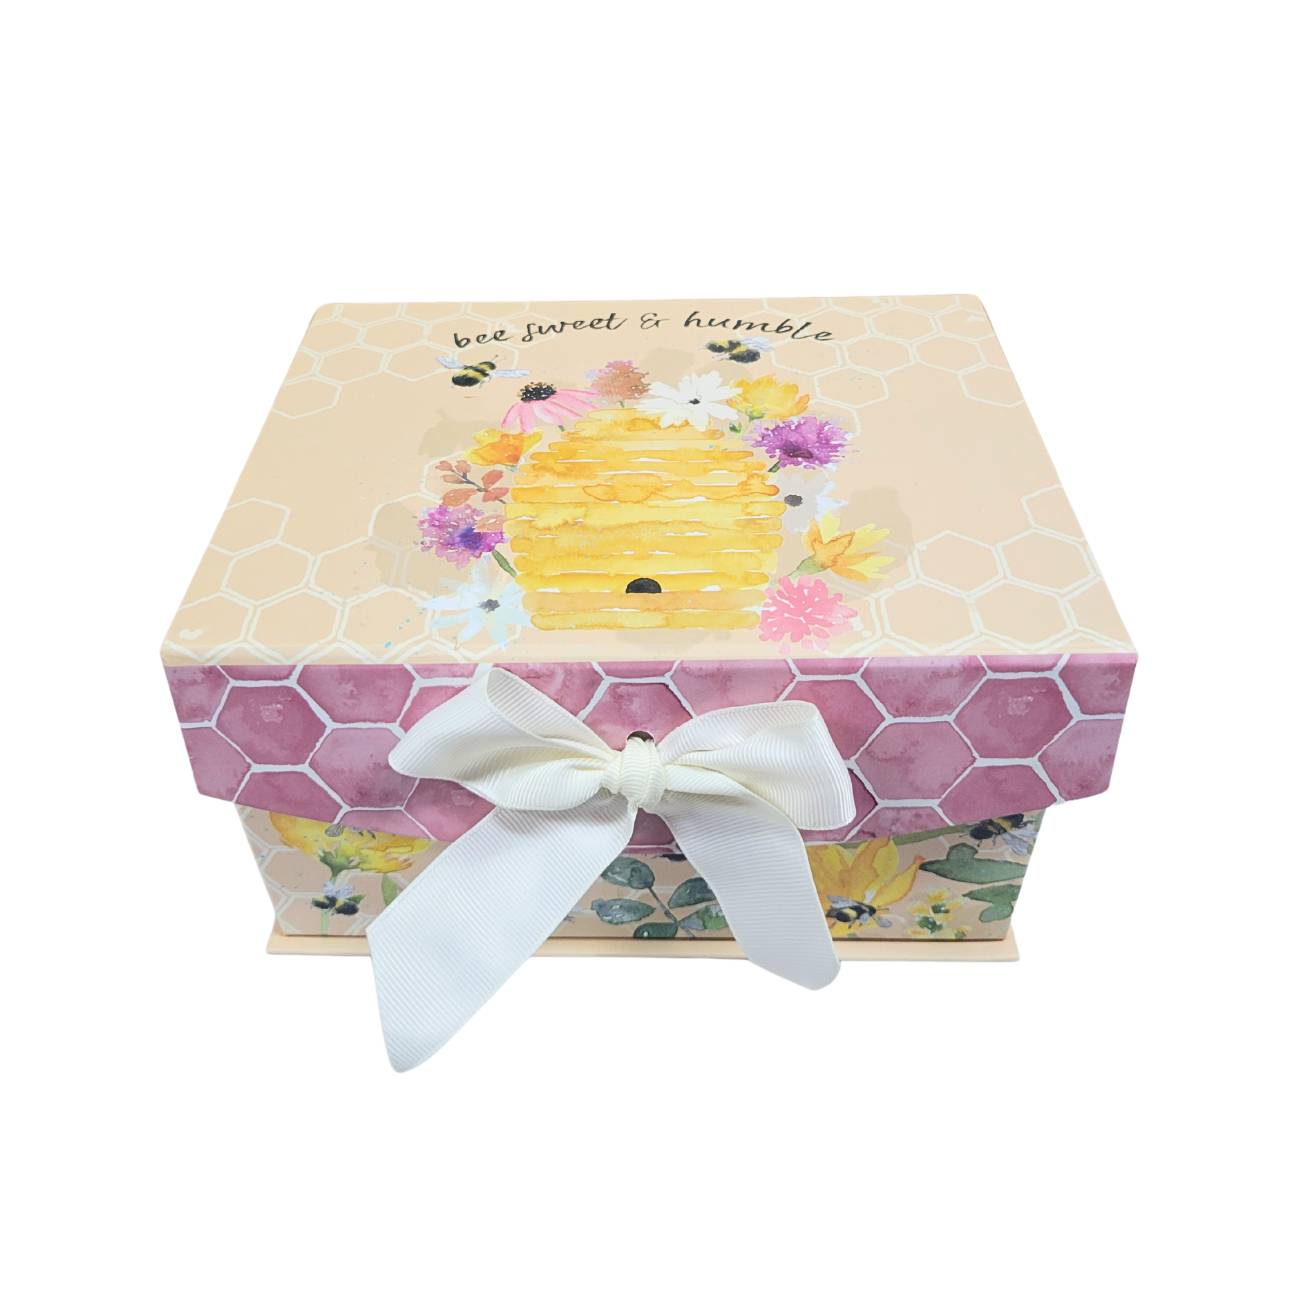 Handmade Goat Milk Soaps and Lotion | Joyful Gift Box for Her